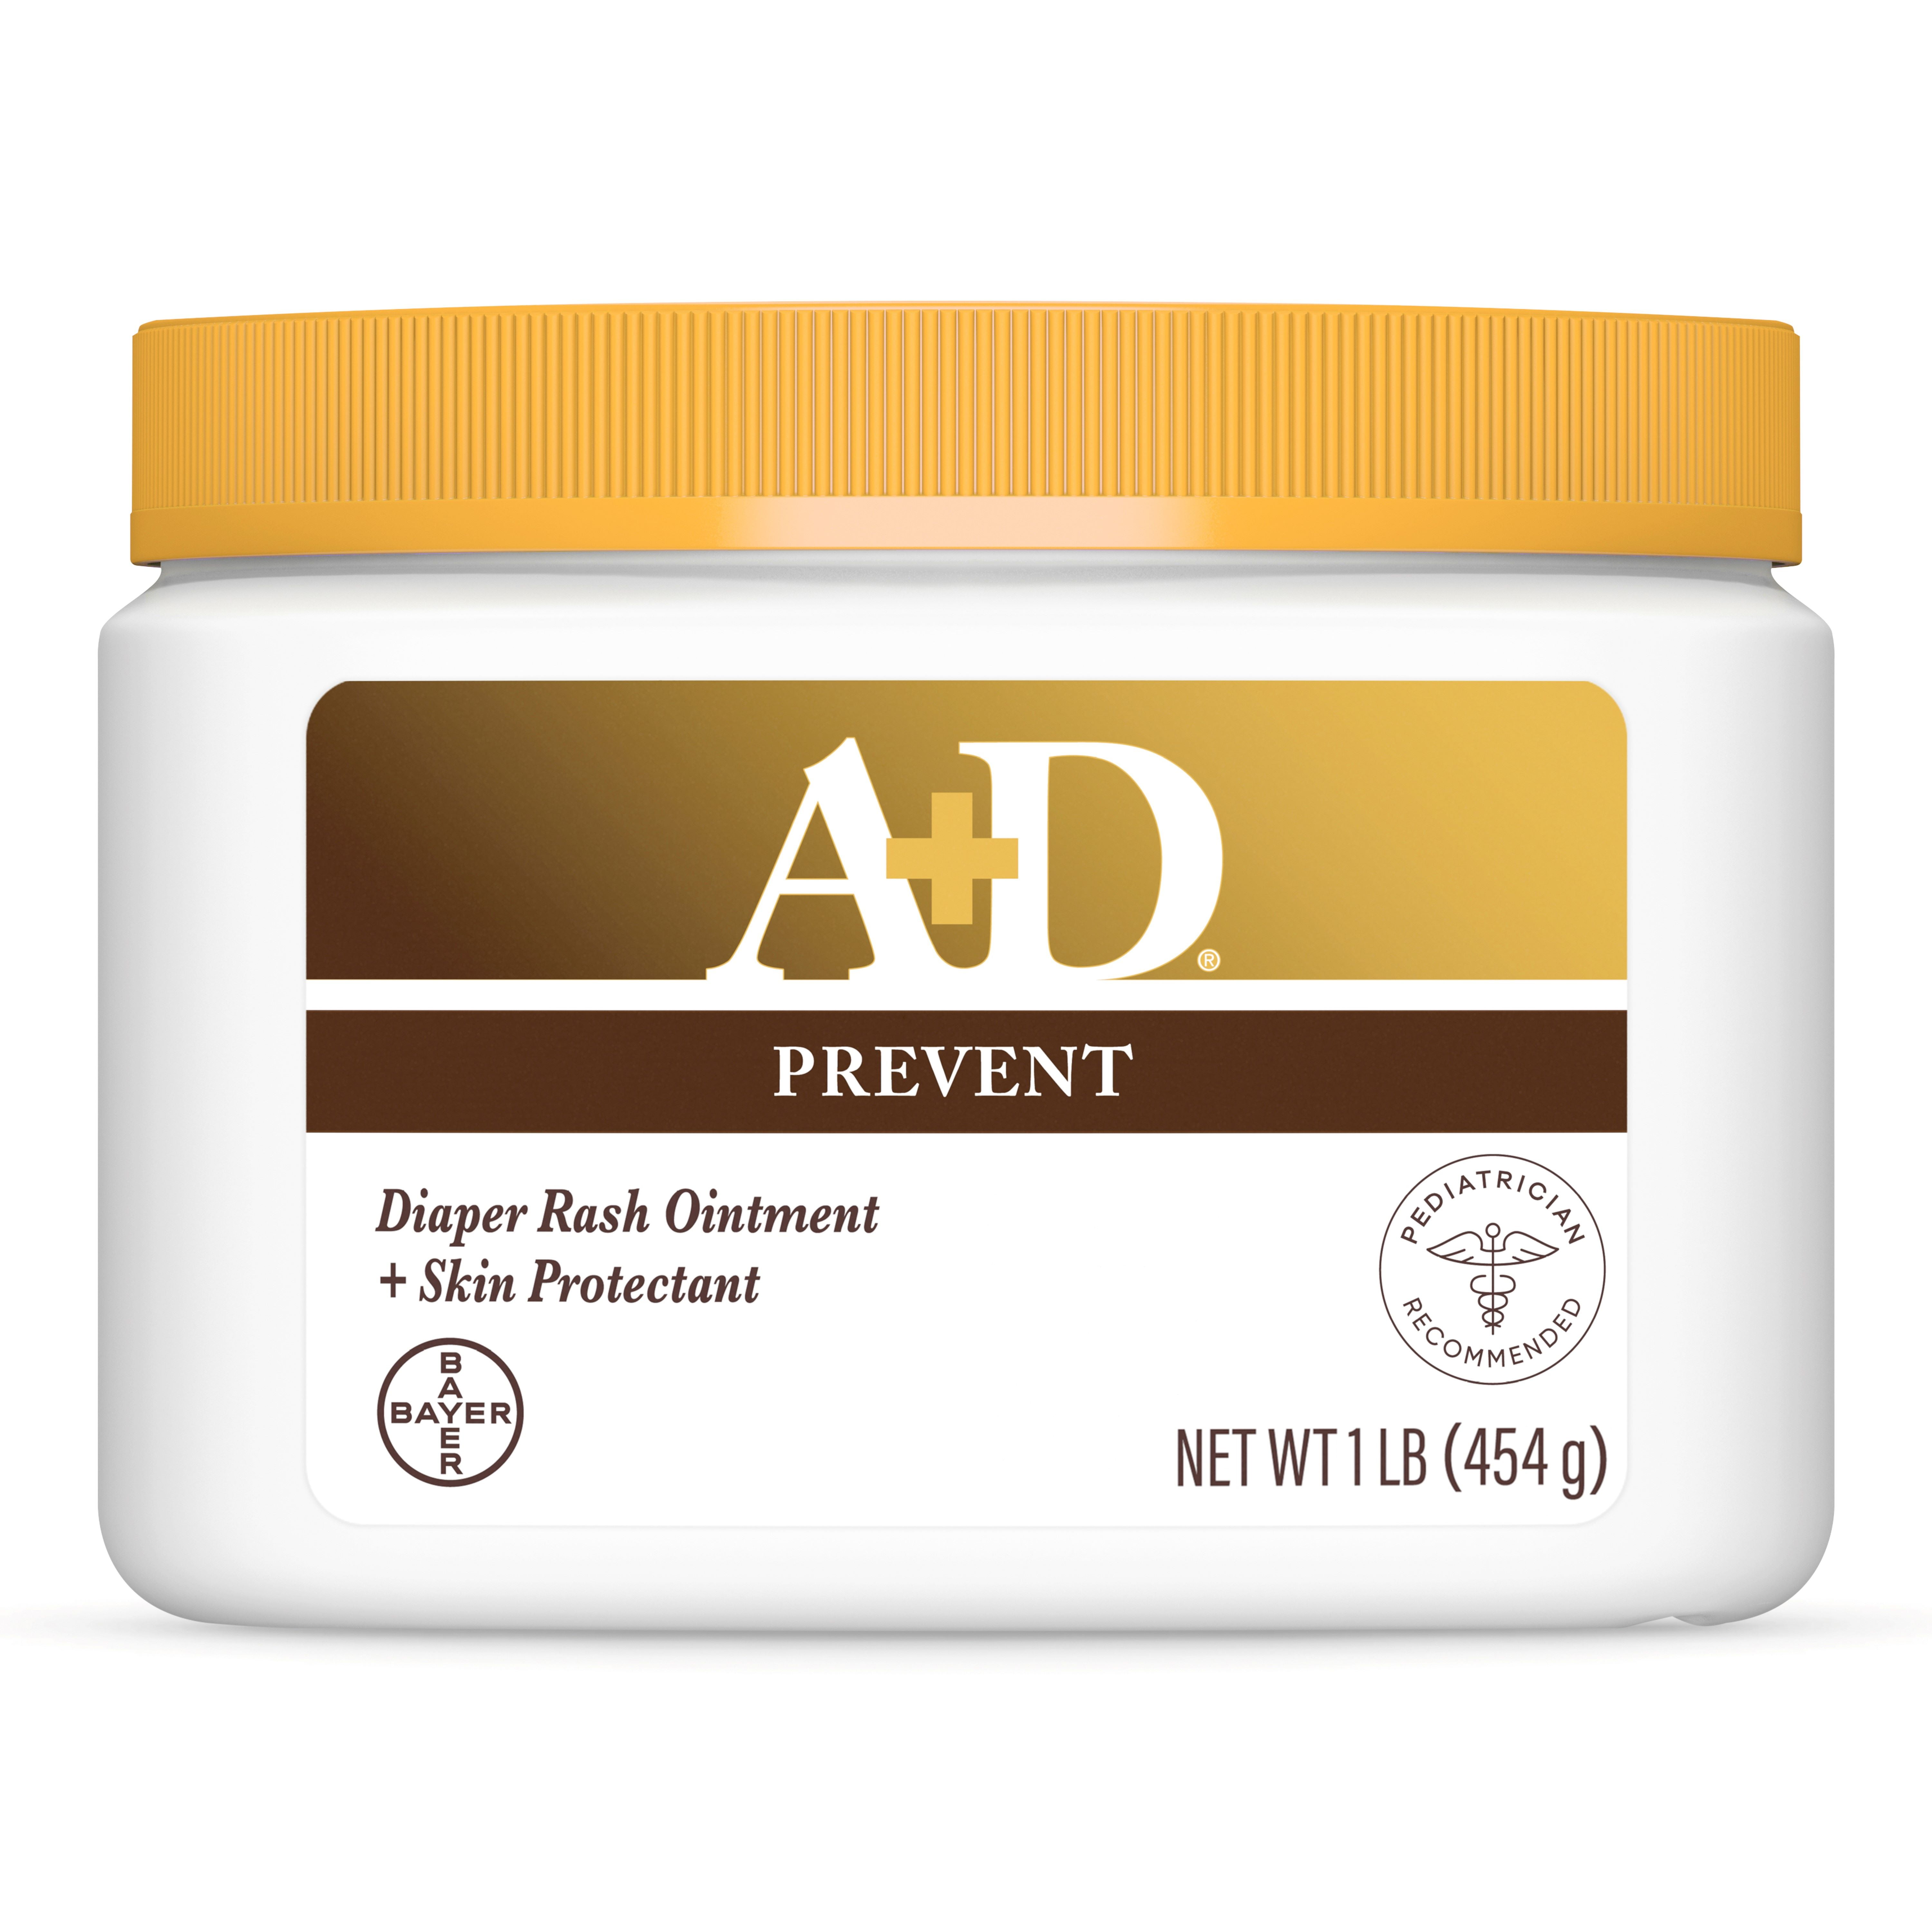 A+D Original Diaper Rash Ointment, Skin Protectant, 16 oz